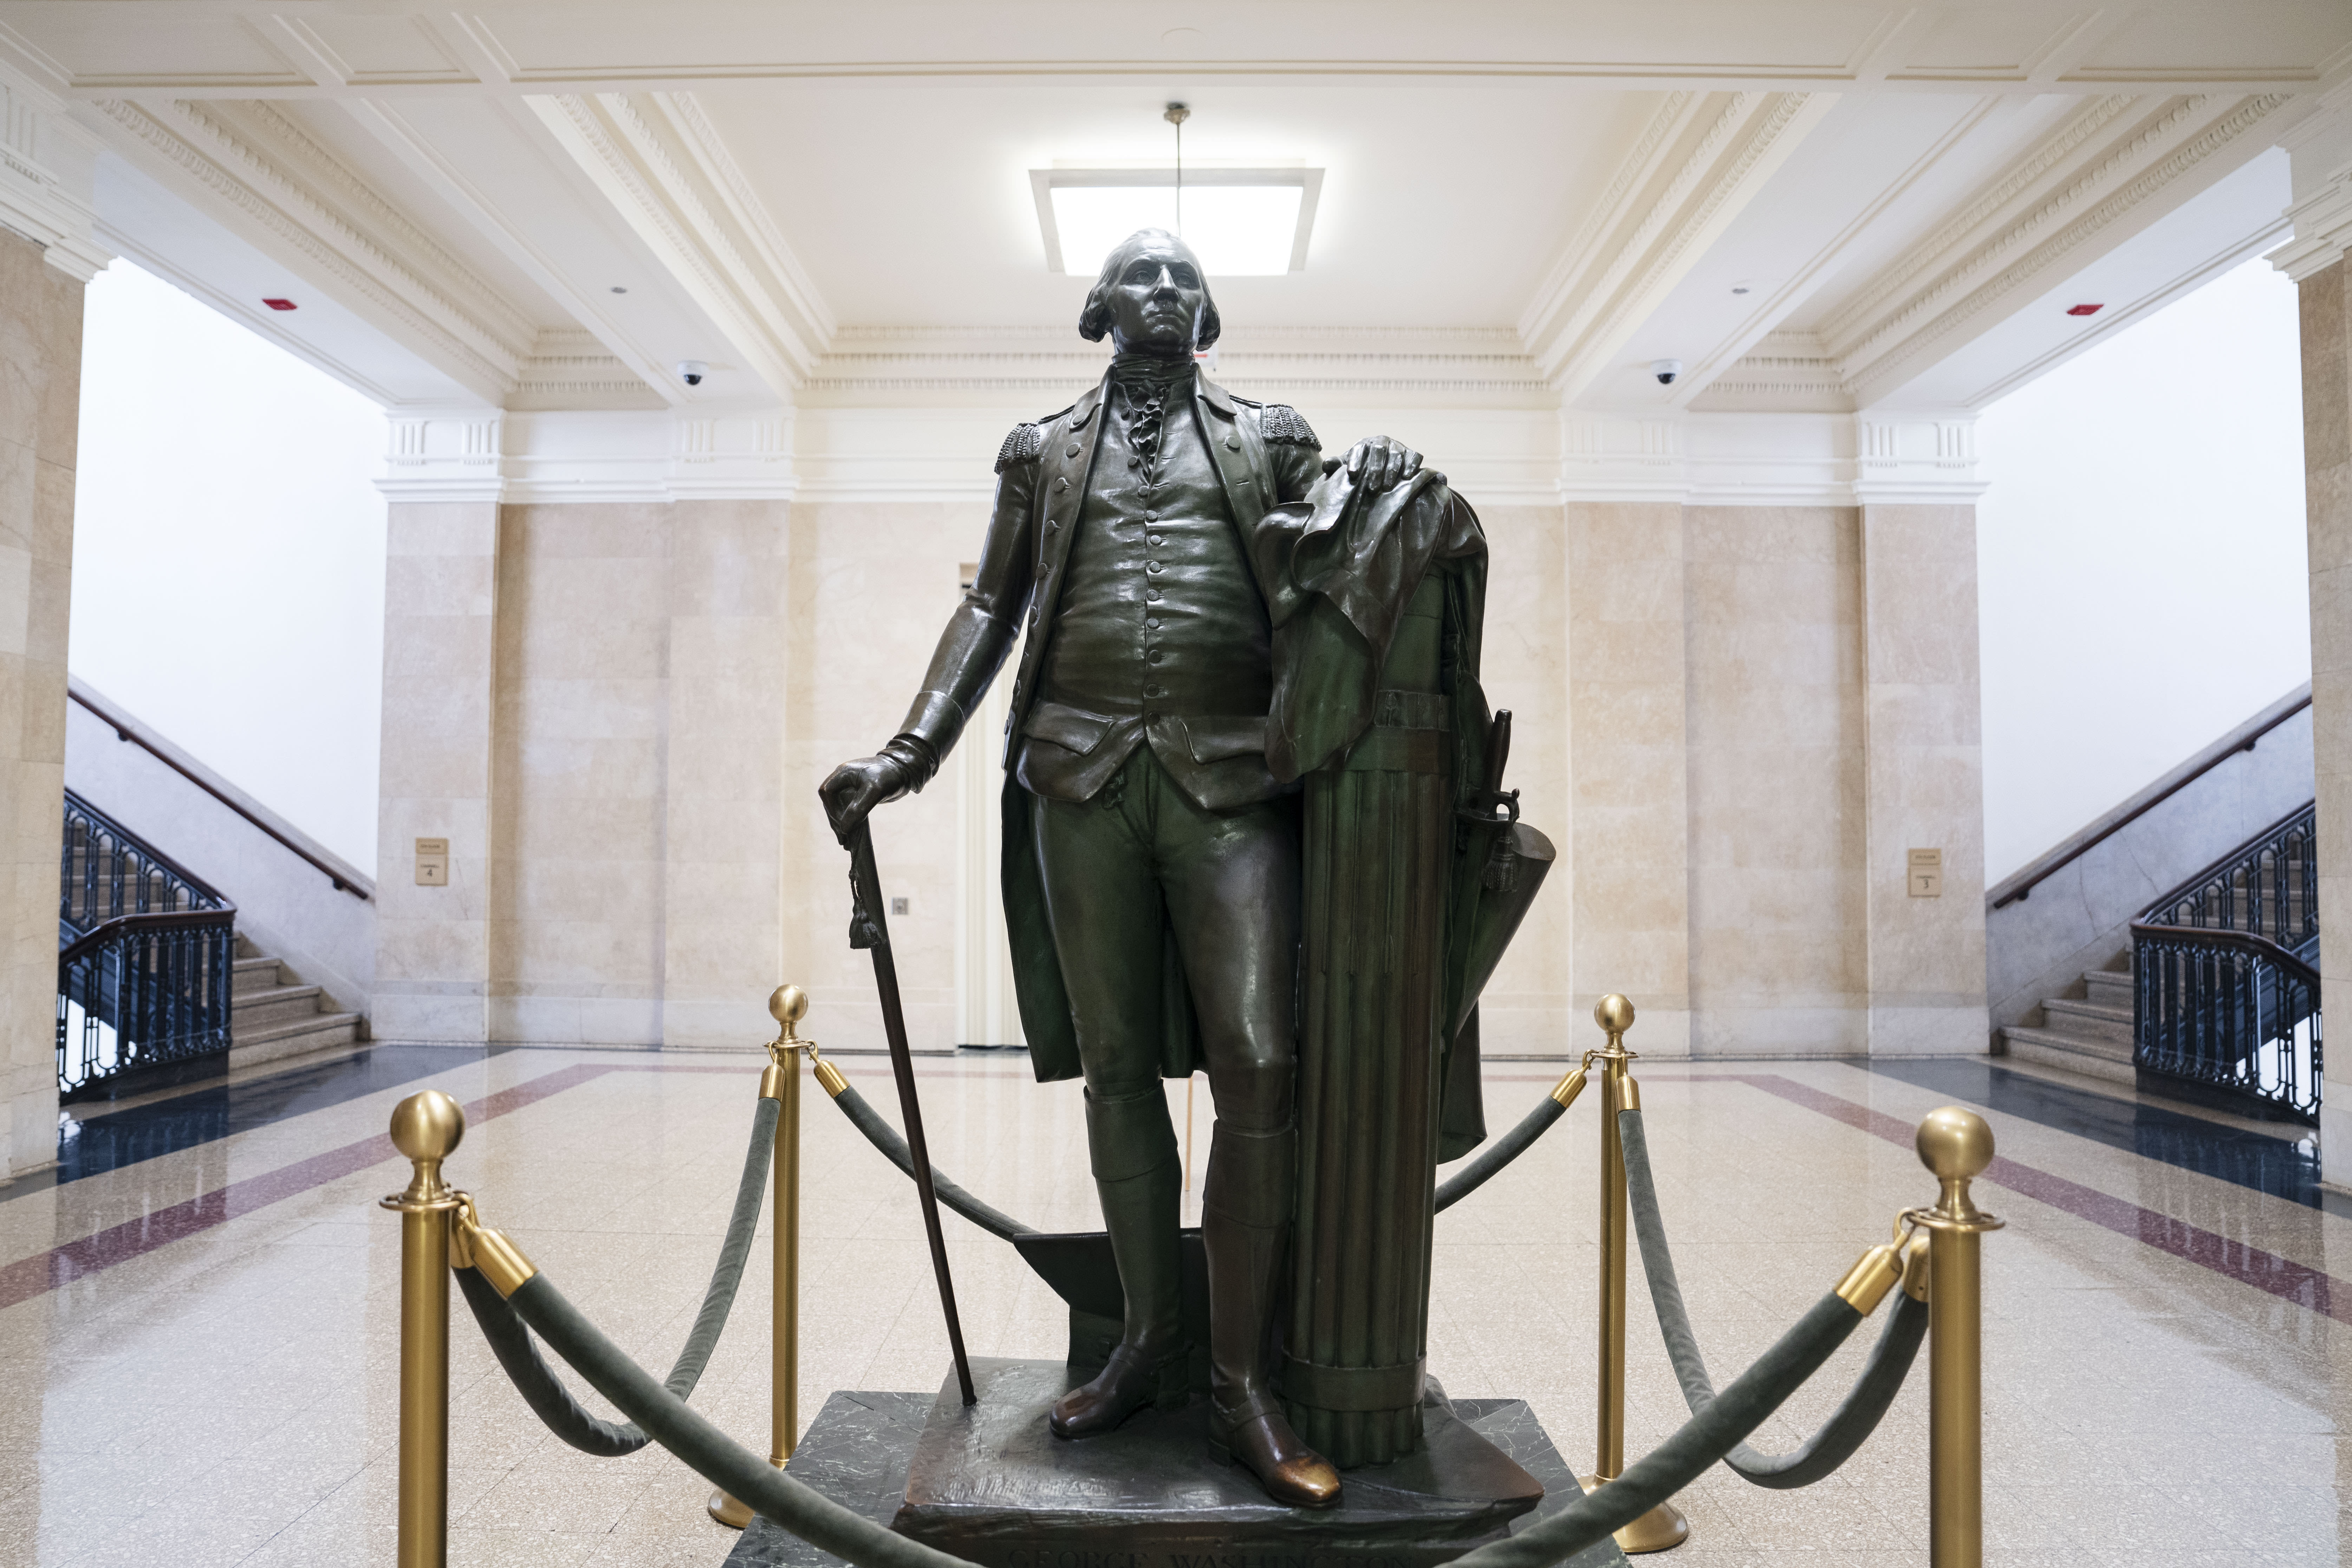 Mayor Johnson nixes plan to remove George Washington statue outside his City Hall office